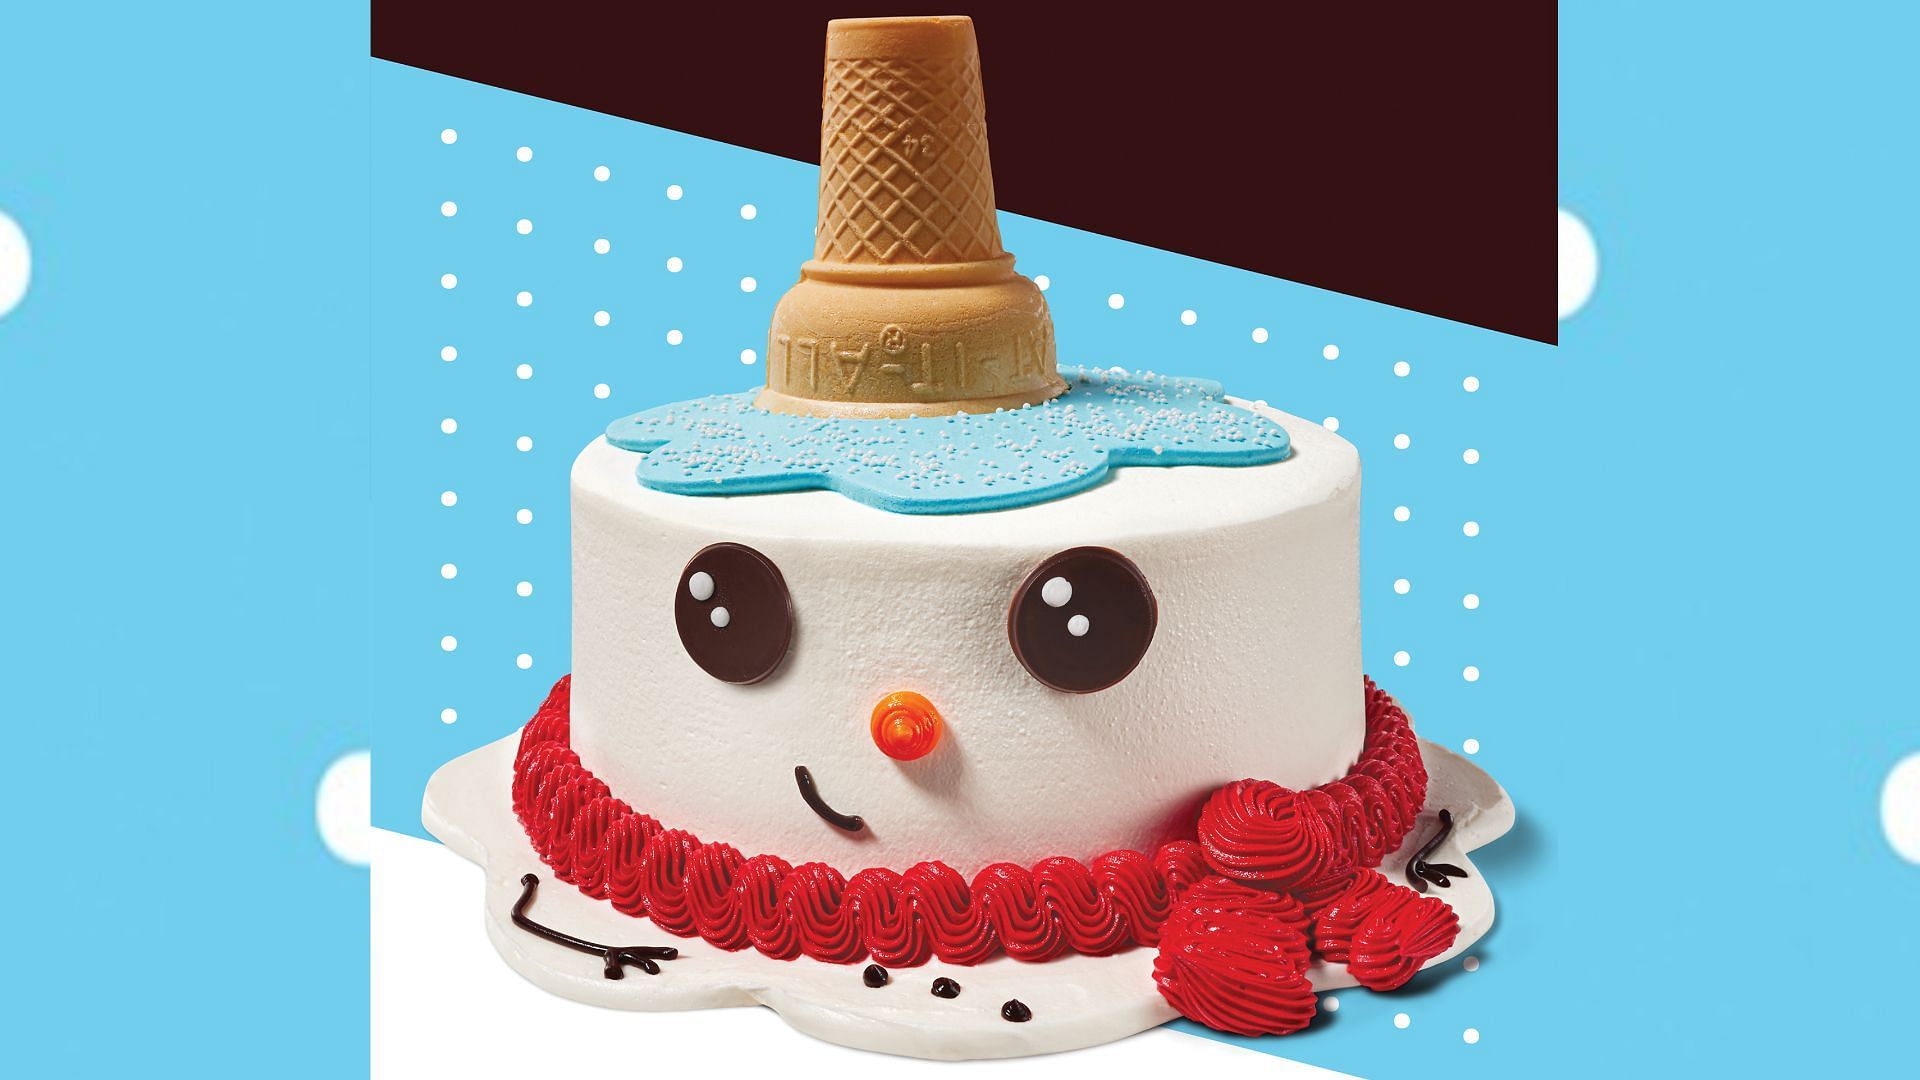 Brr the Snowman Cake returns for the holiday season (Image via Baskin-Robbins Press Release)